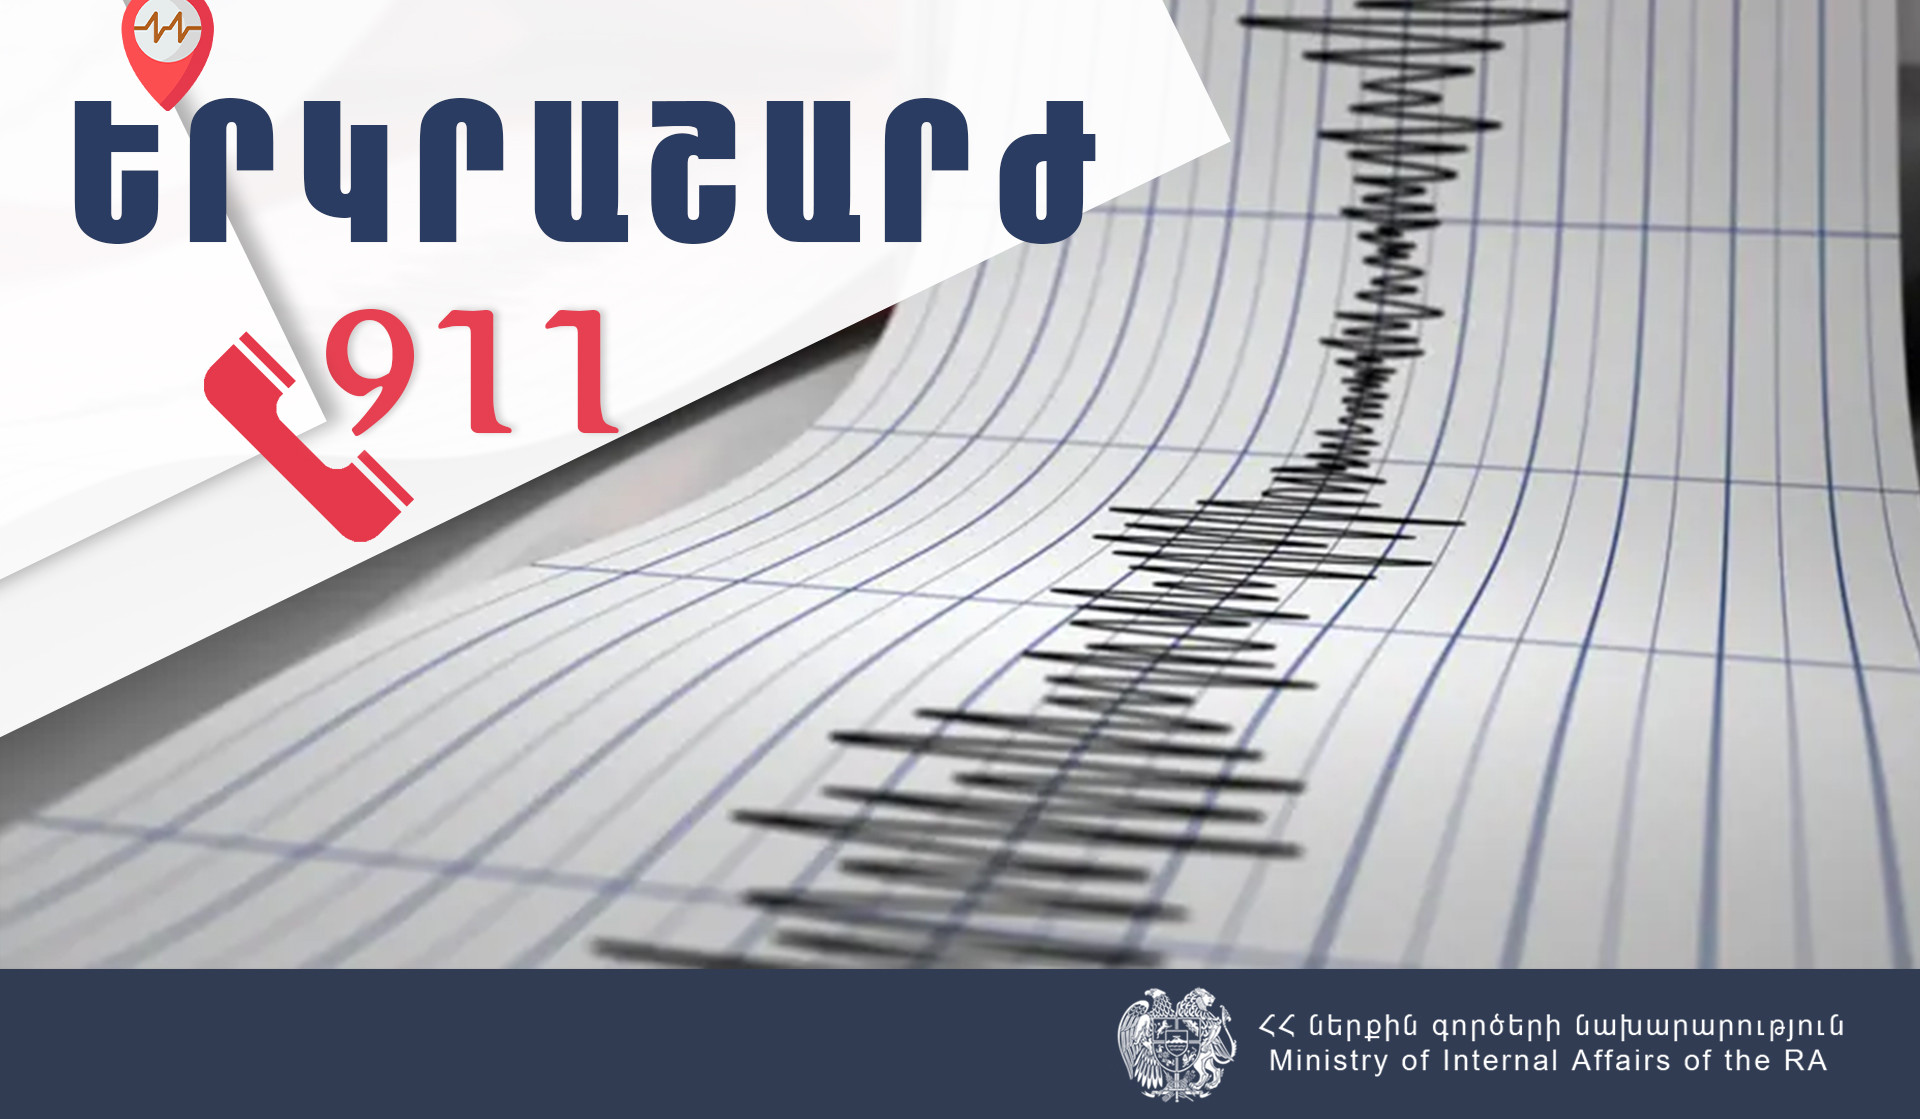 Earthquake occurred in Azerbaijan, it was also felt in Armenia